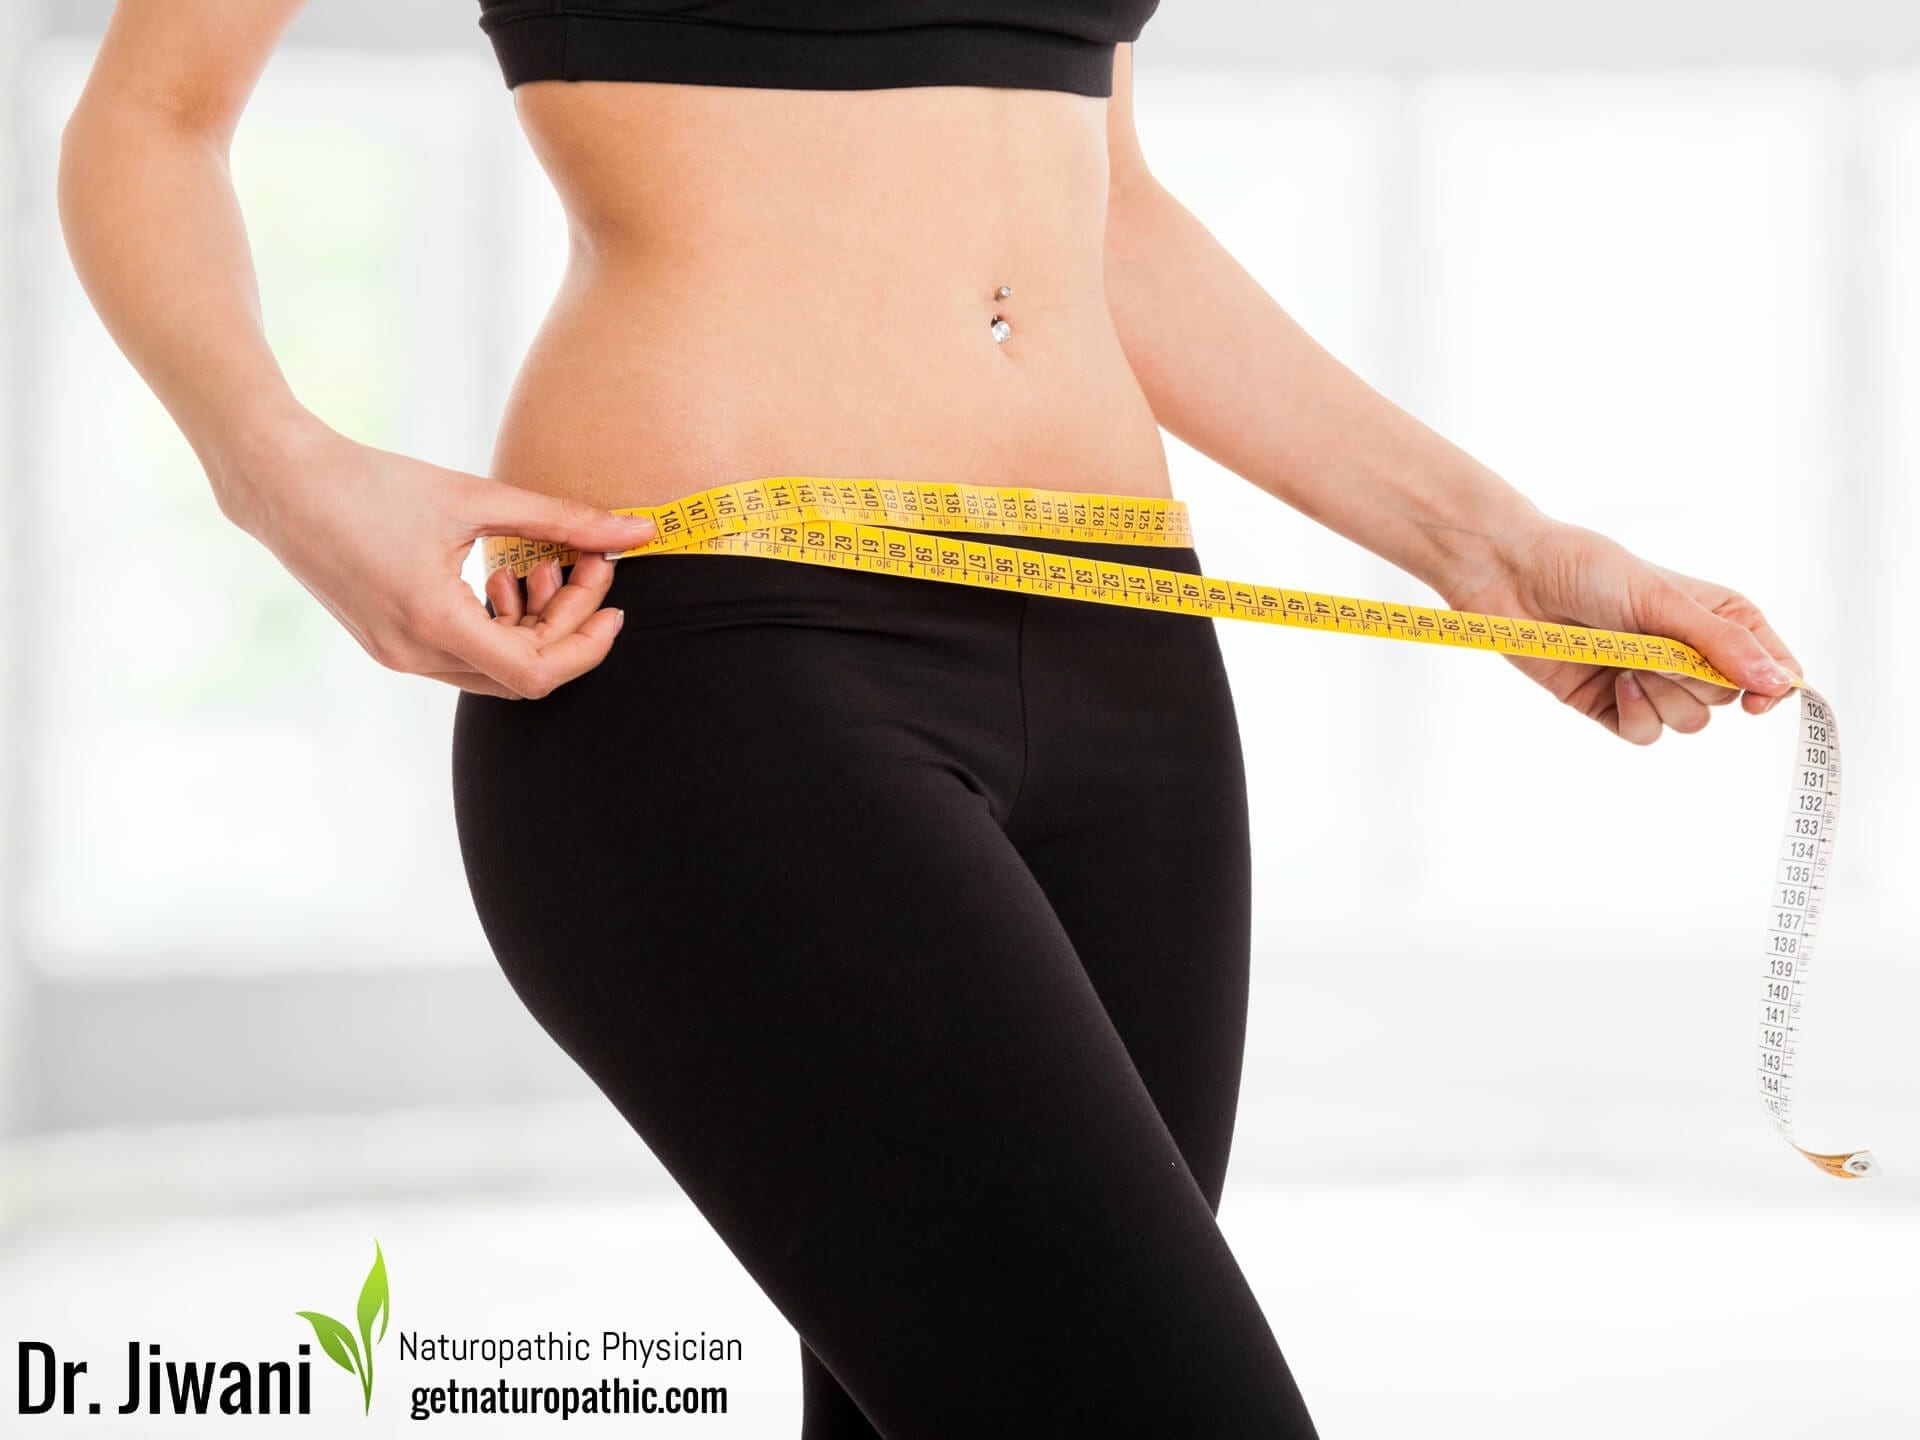 DrJiwani-Intermittent-Fasting-for-Health-Energy-Weight-Loss-Ketosis-Fat-Burning.jpg